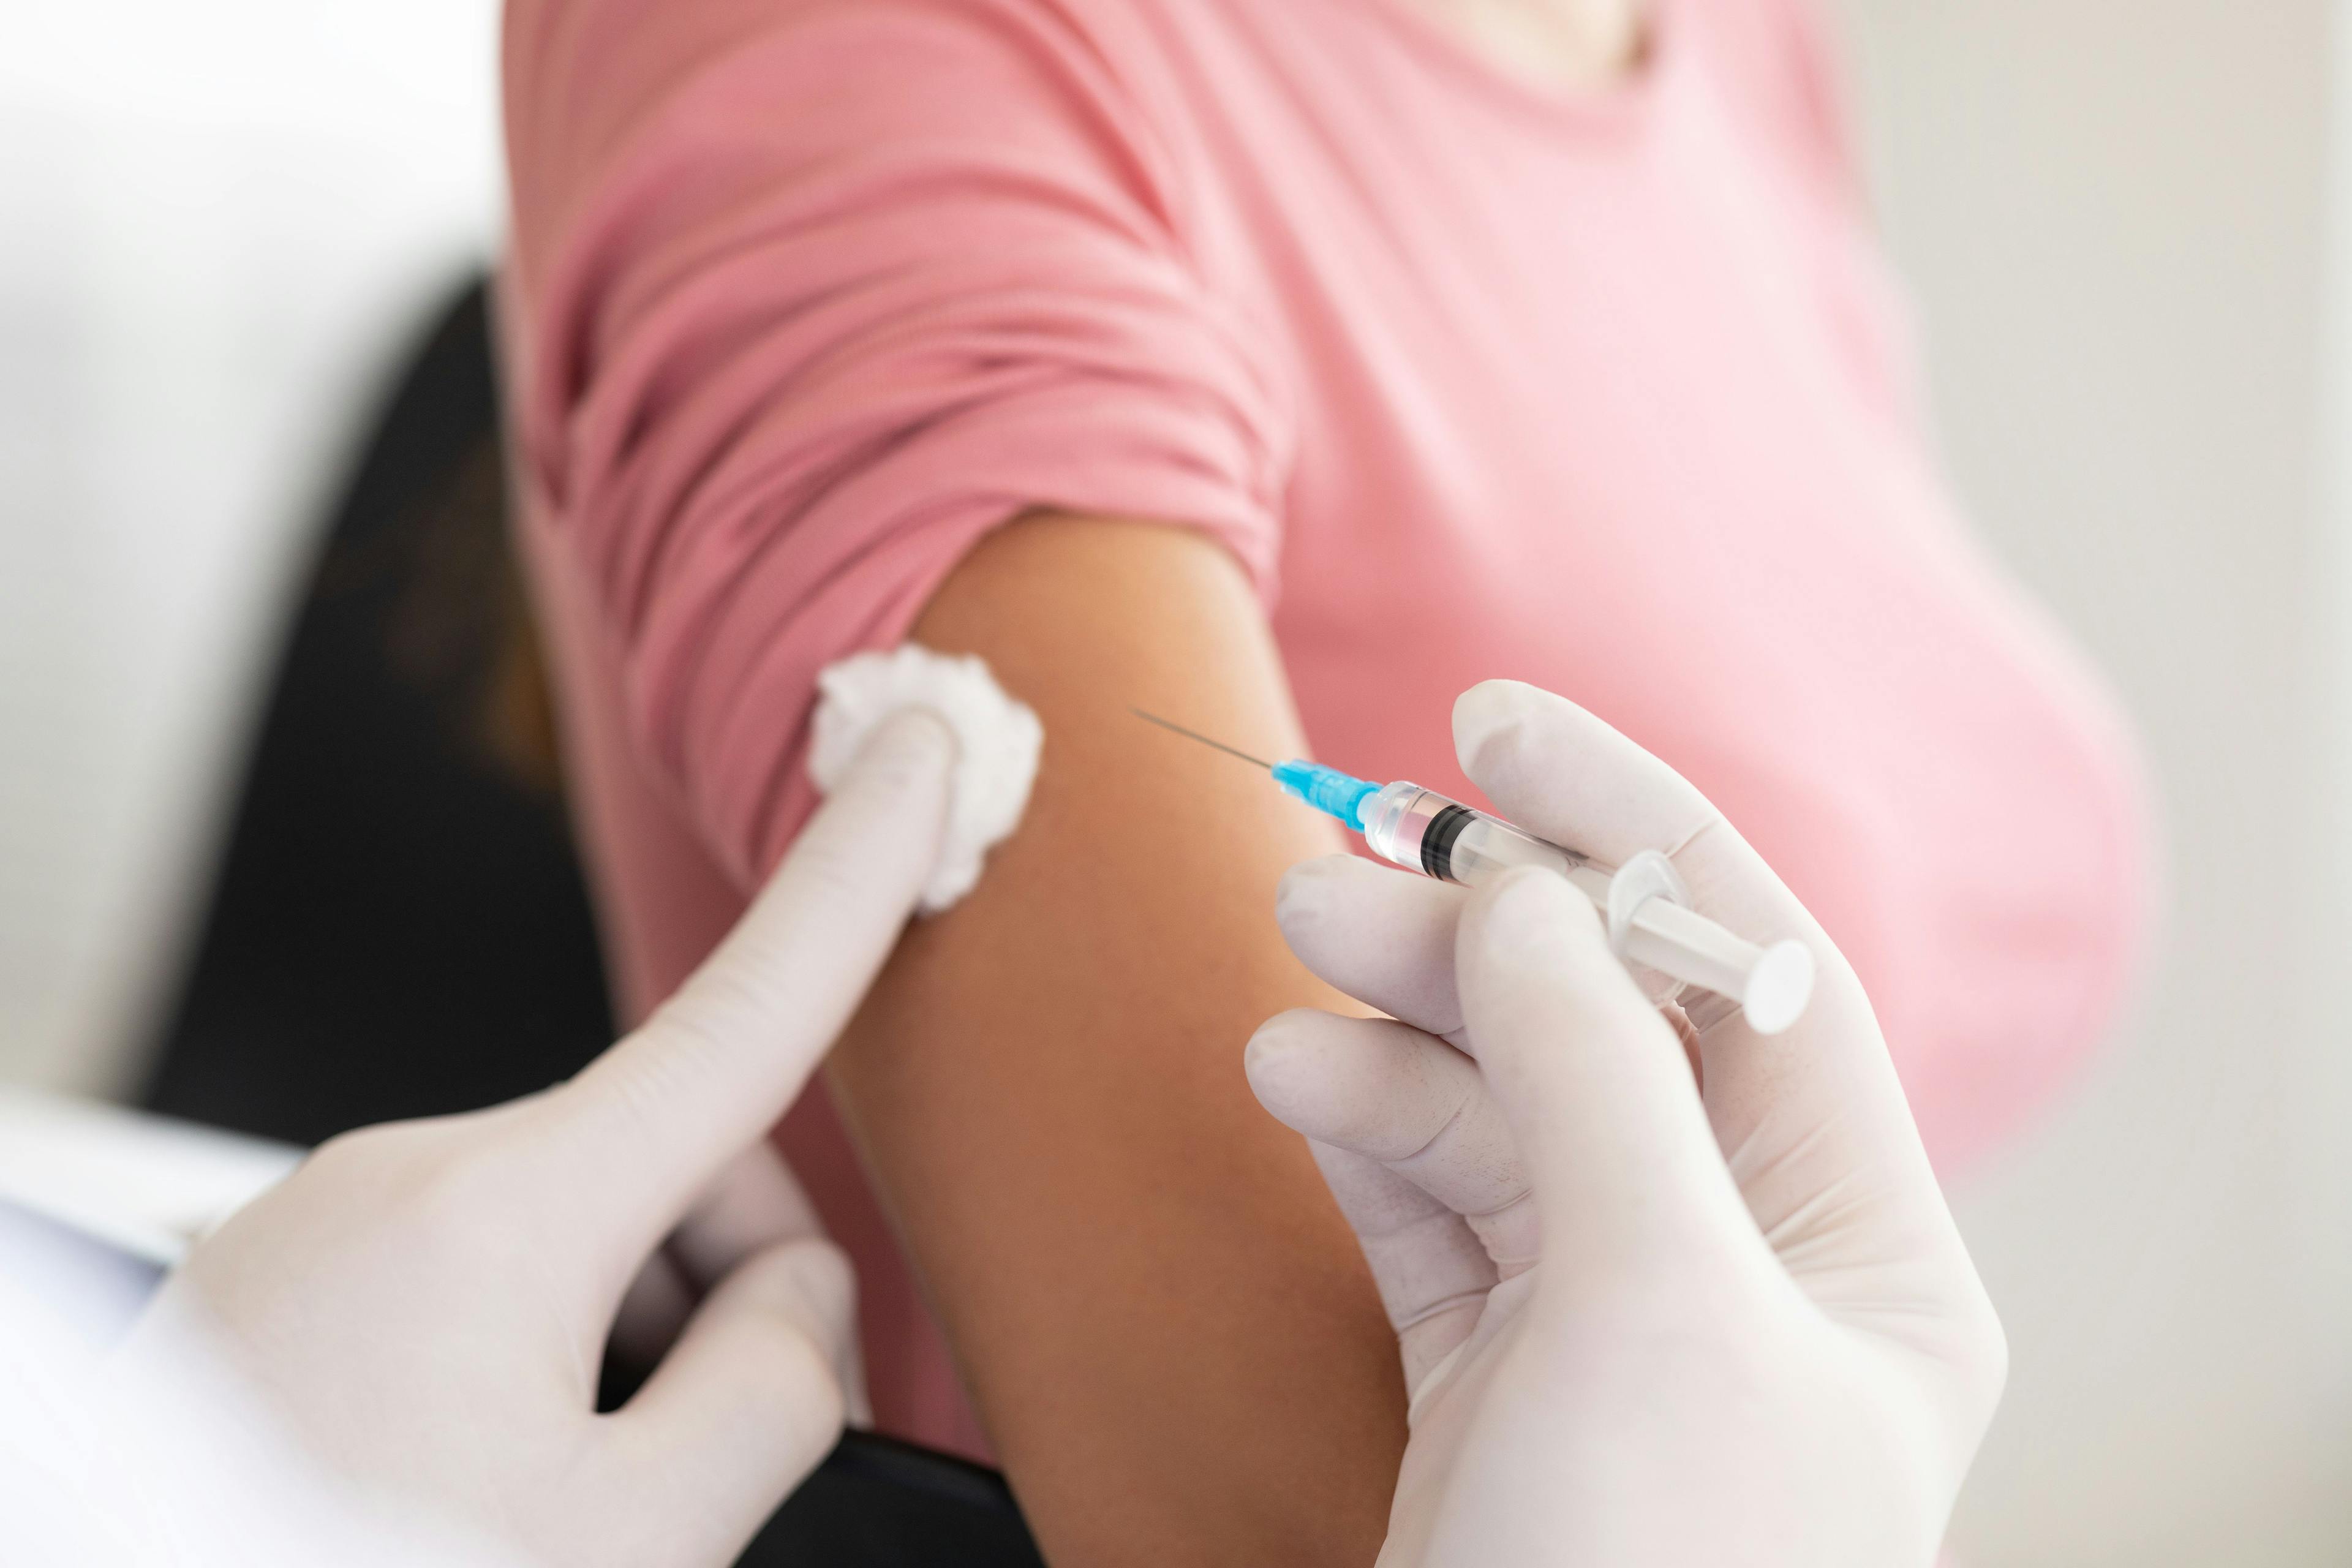 Woman receiving vaccination | Prostock-studio | stock.adobe.com